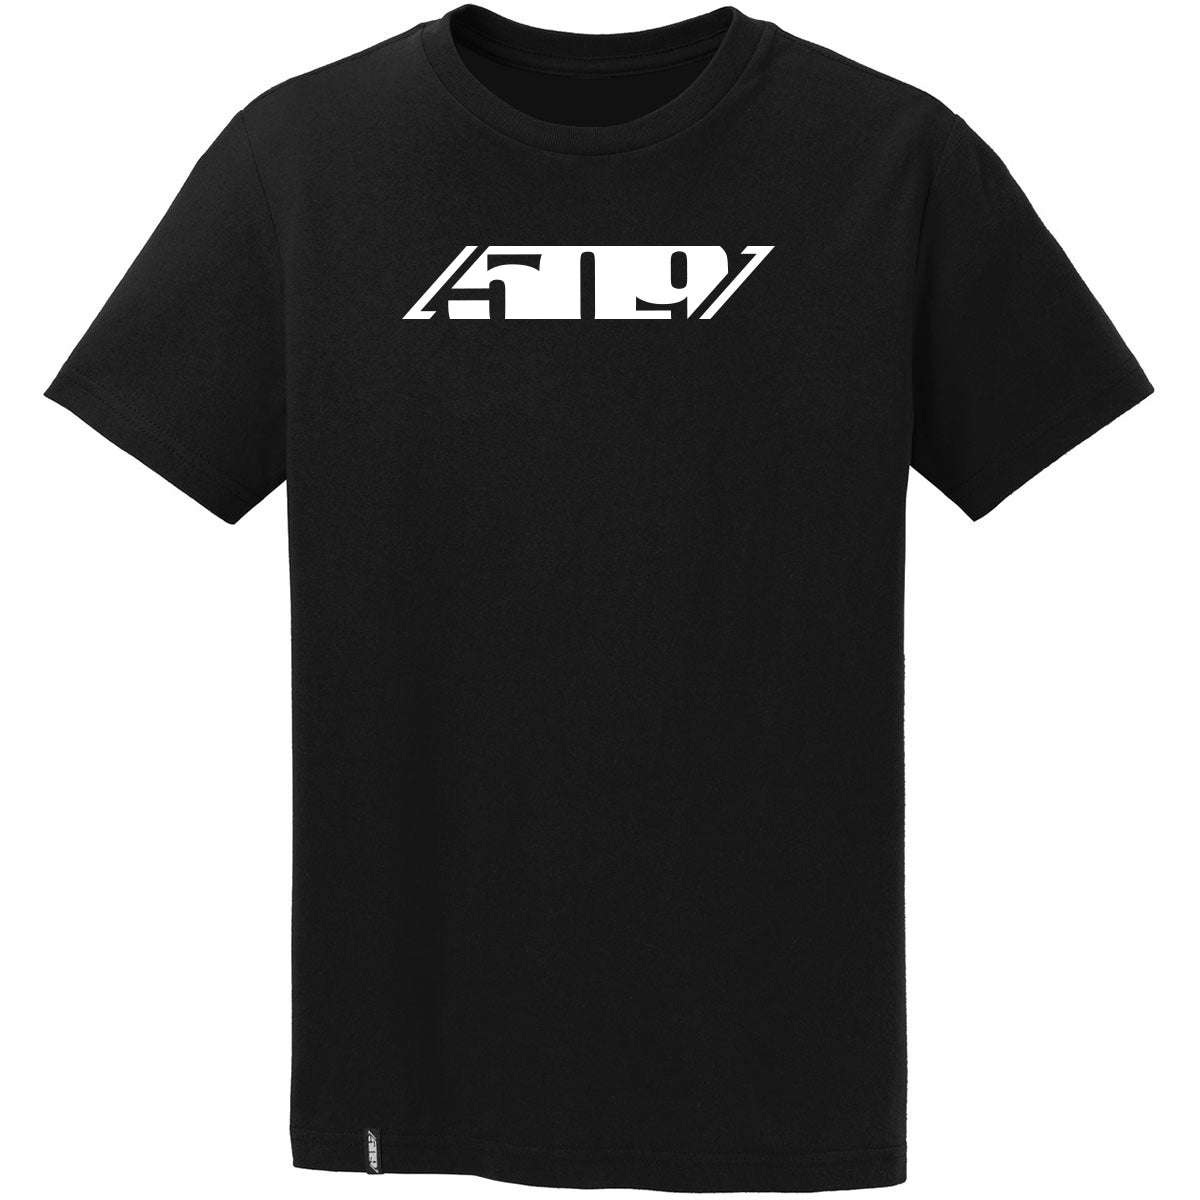 509 F09007400-014-001 Legacy Youth T-Shirt (Large, Black)